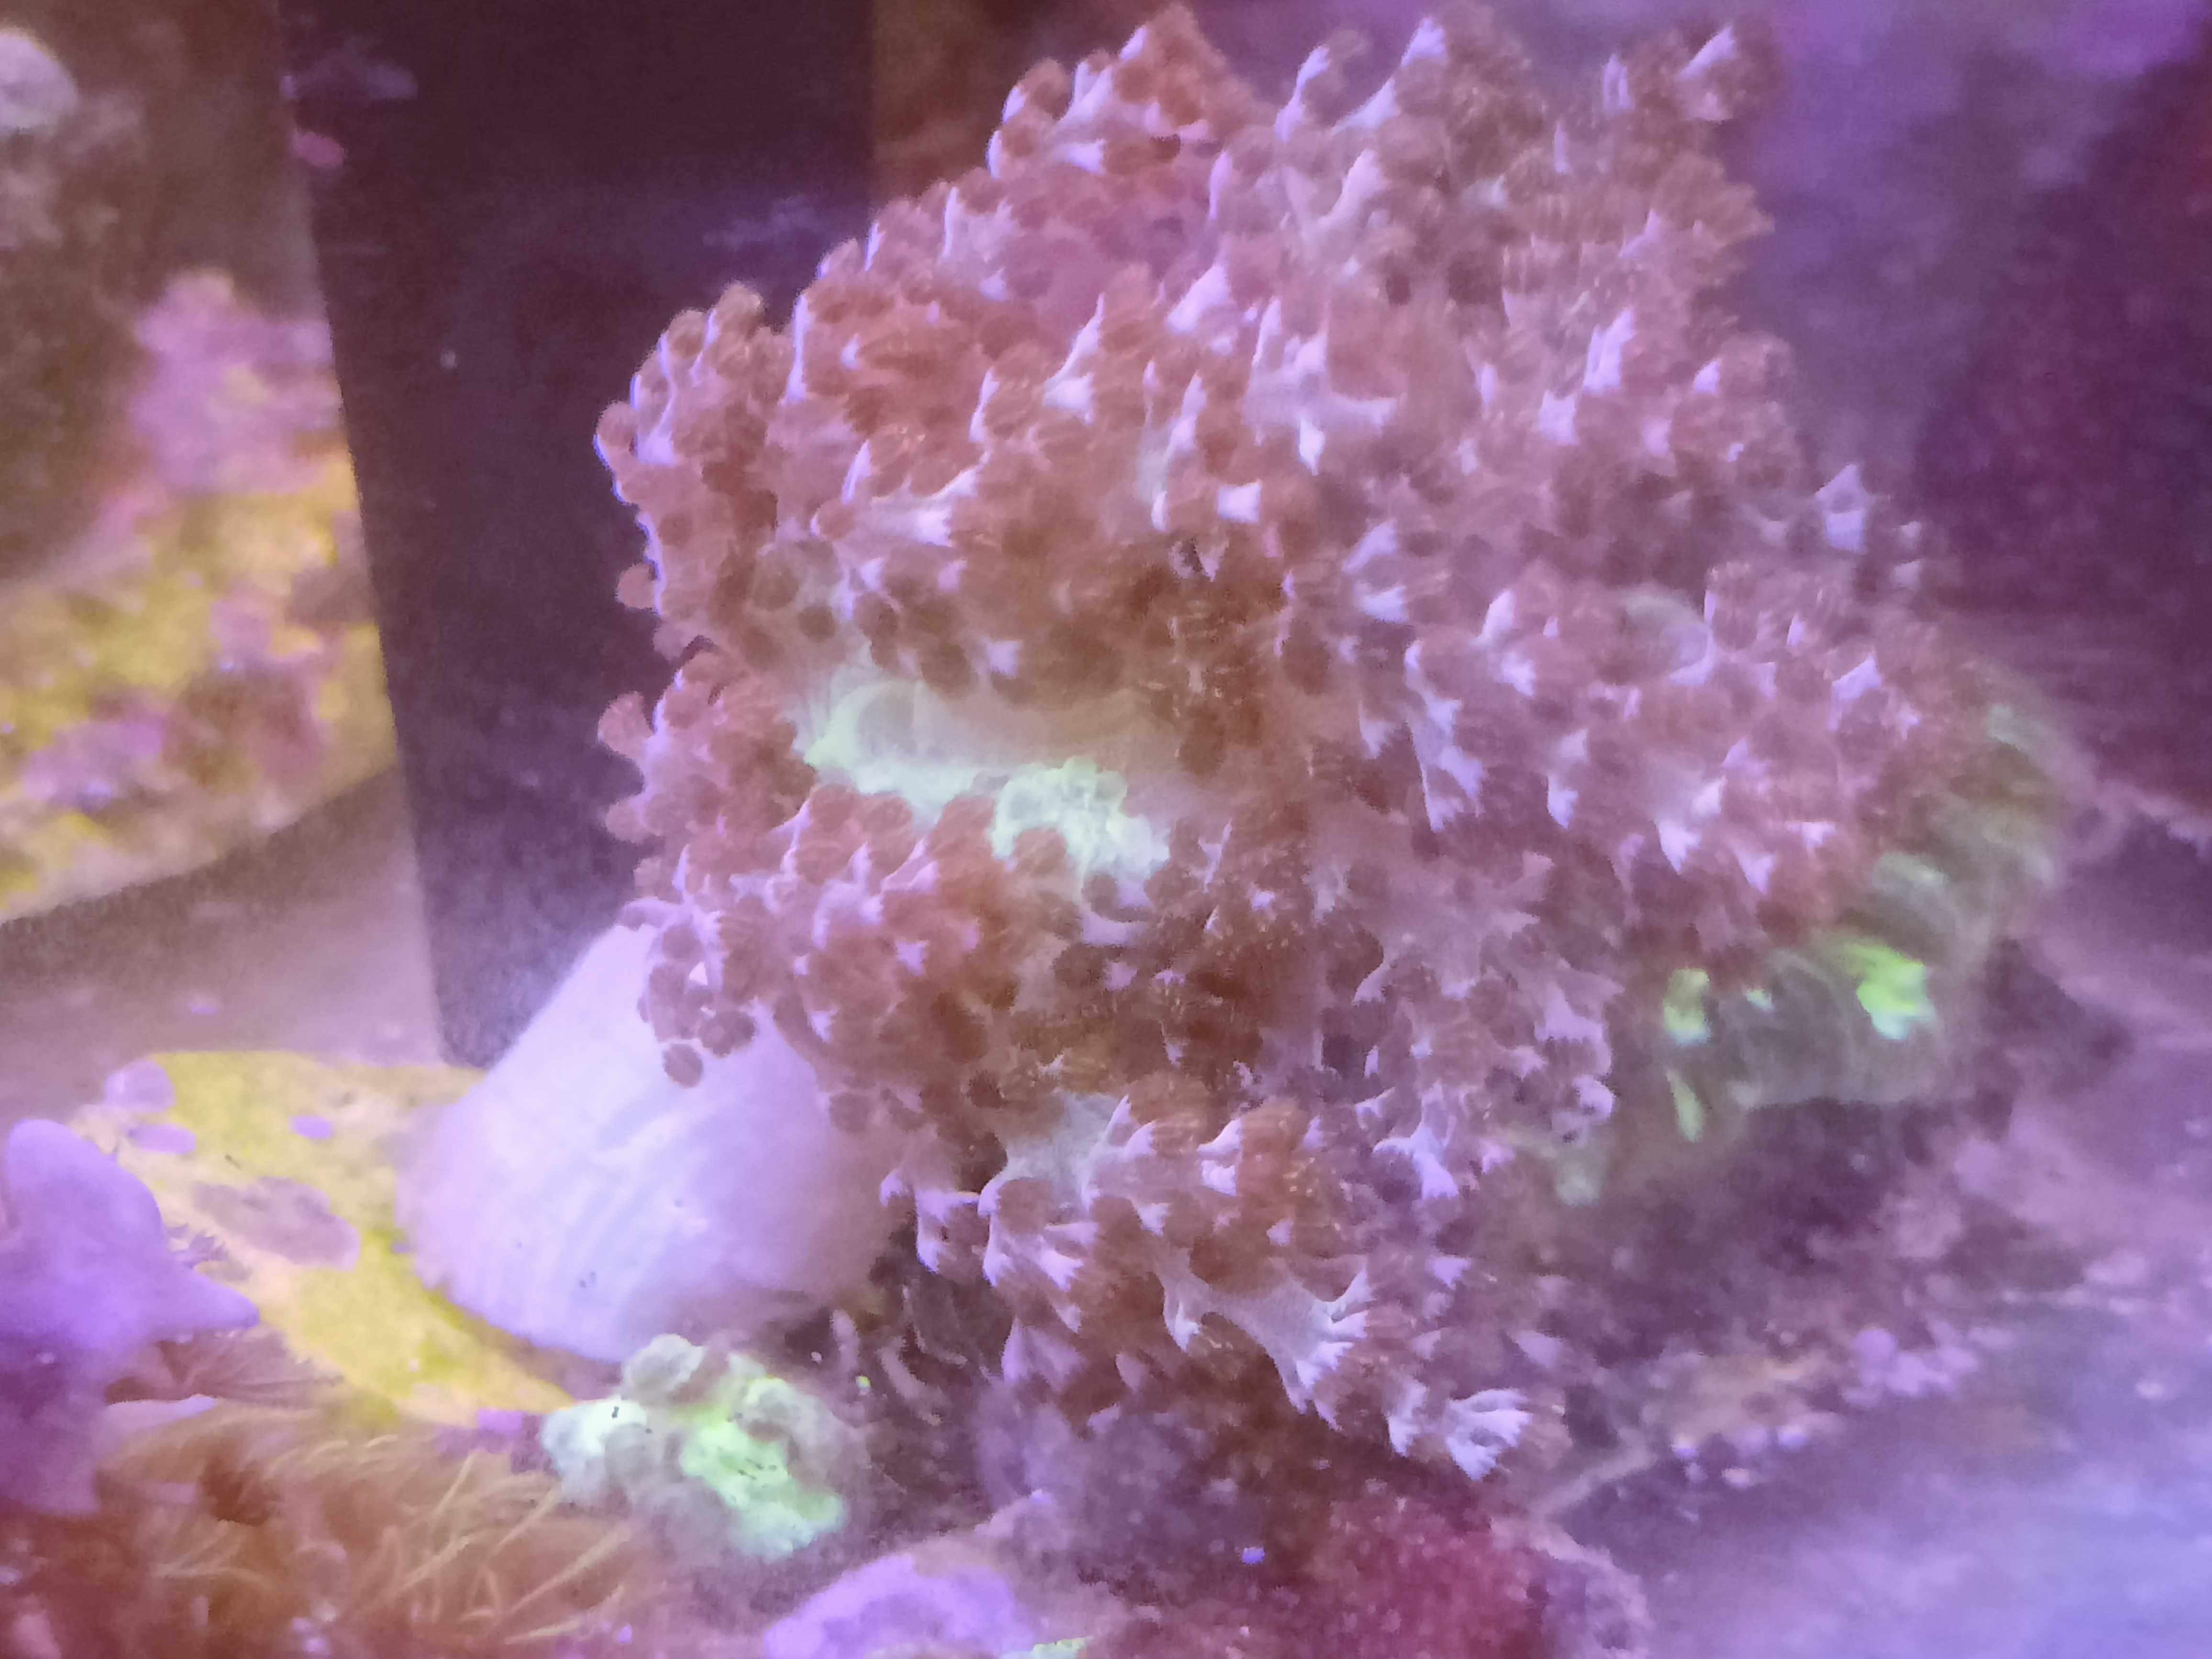 Capnella koralowiec miękki. Morskie